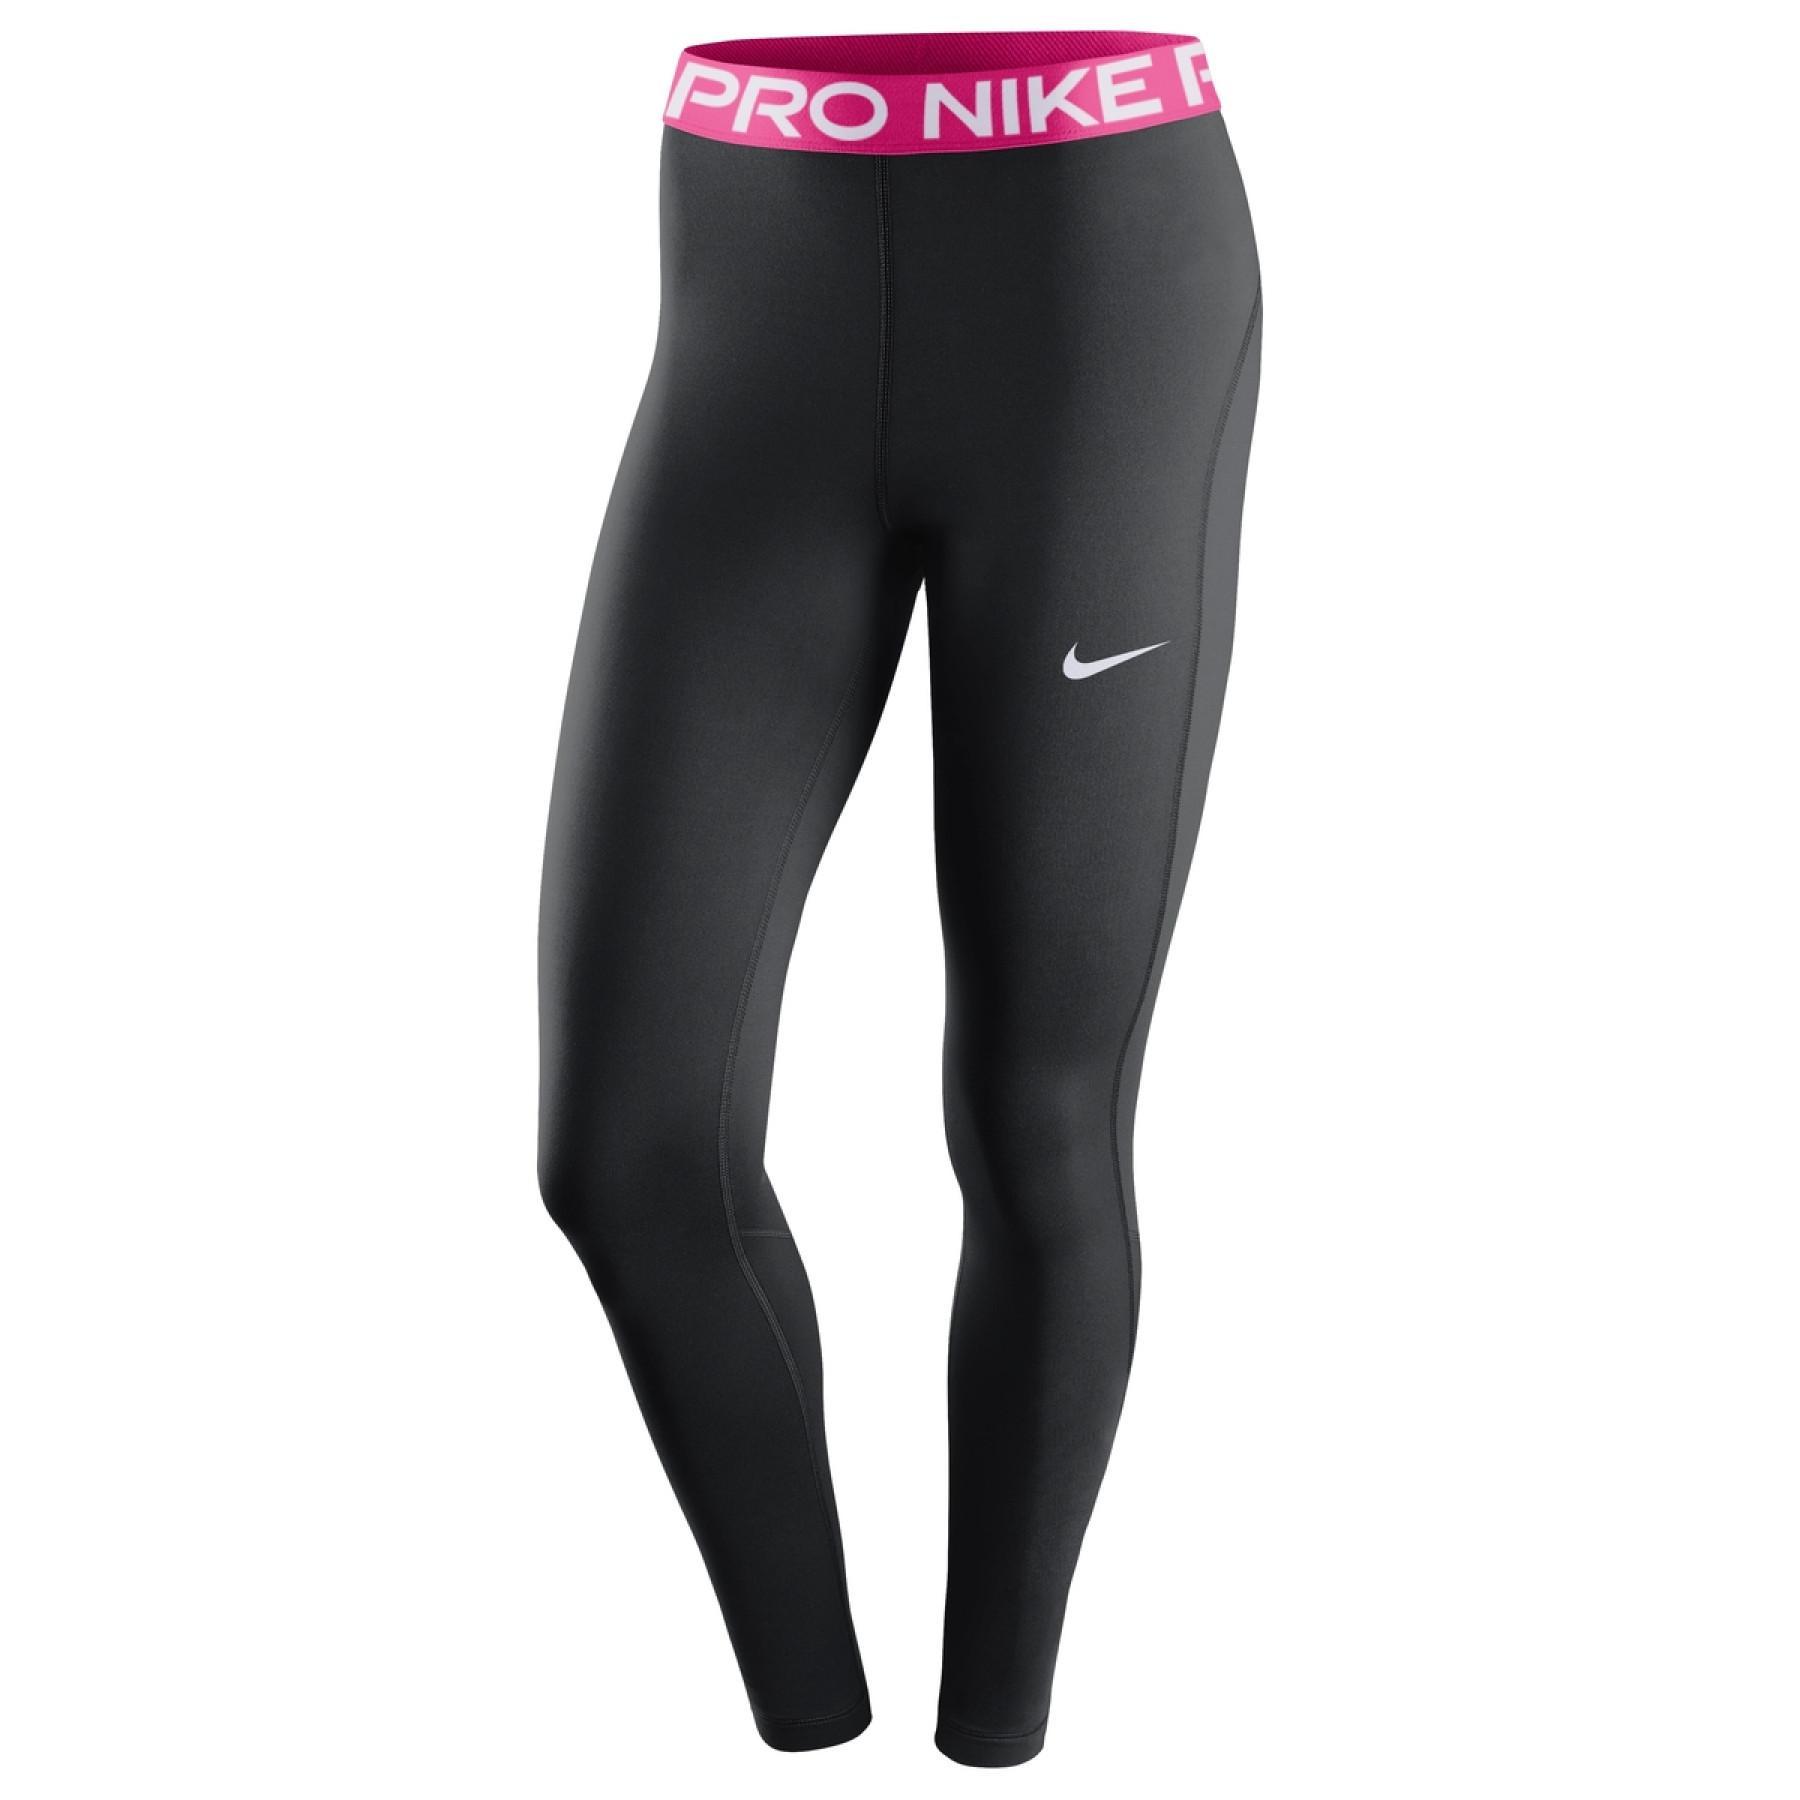 Nike Pro Training 365 leggings in black